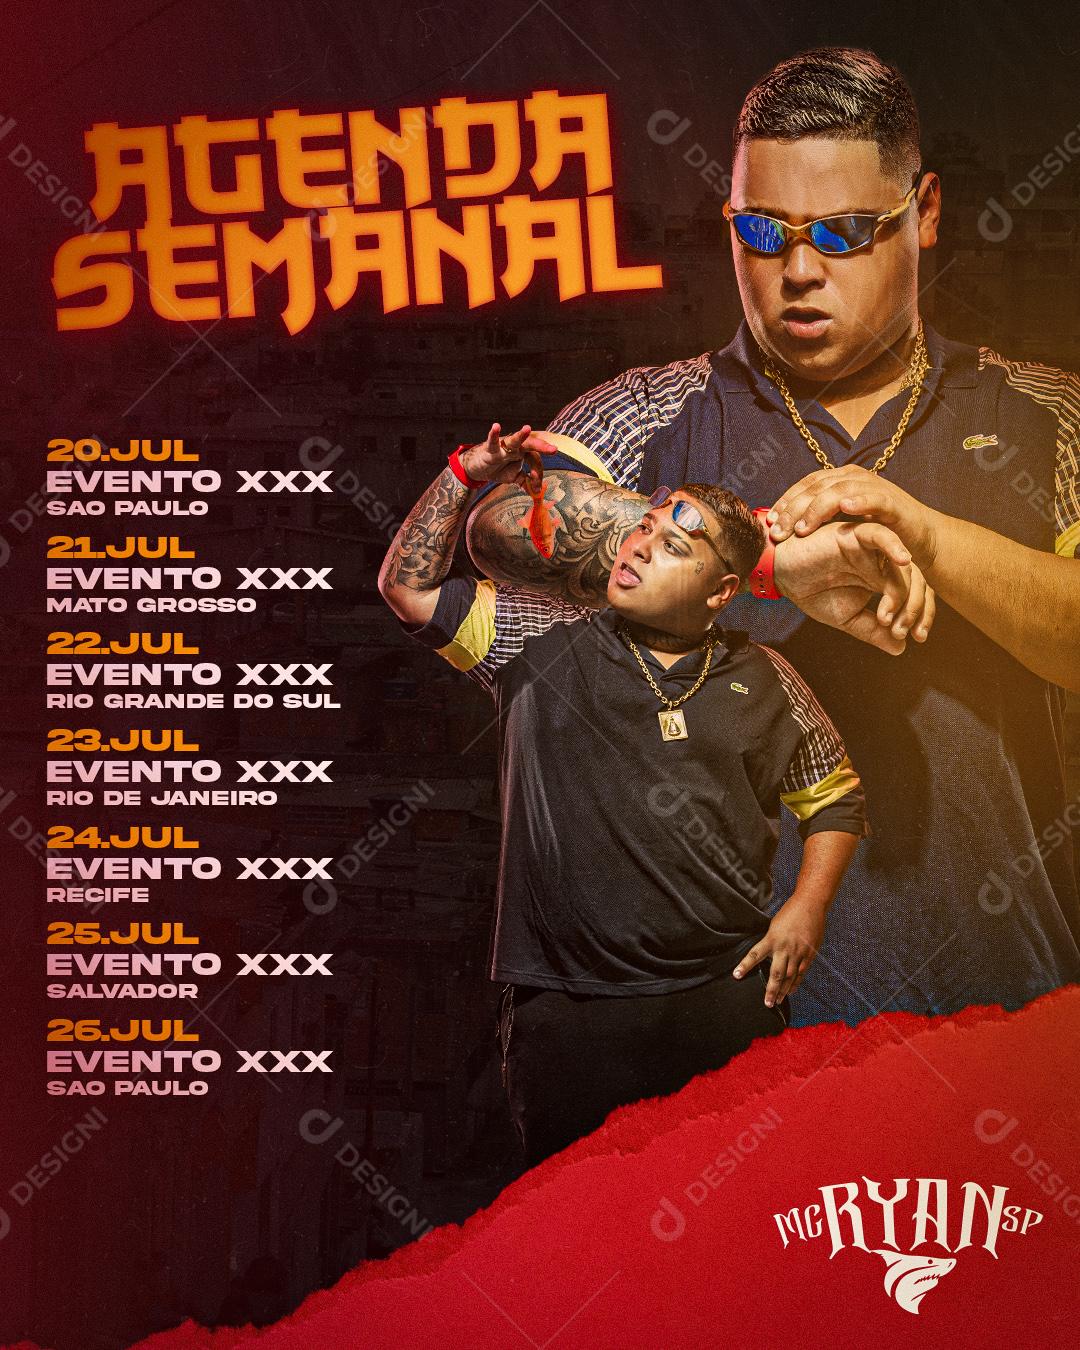 Flyer Agenda Semanal Show Mc Ryan Social Media PSD Editável